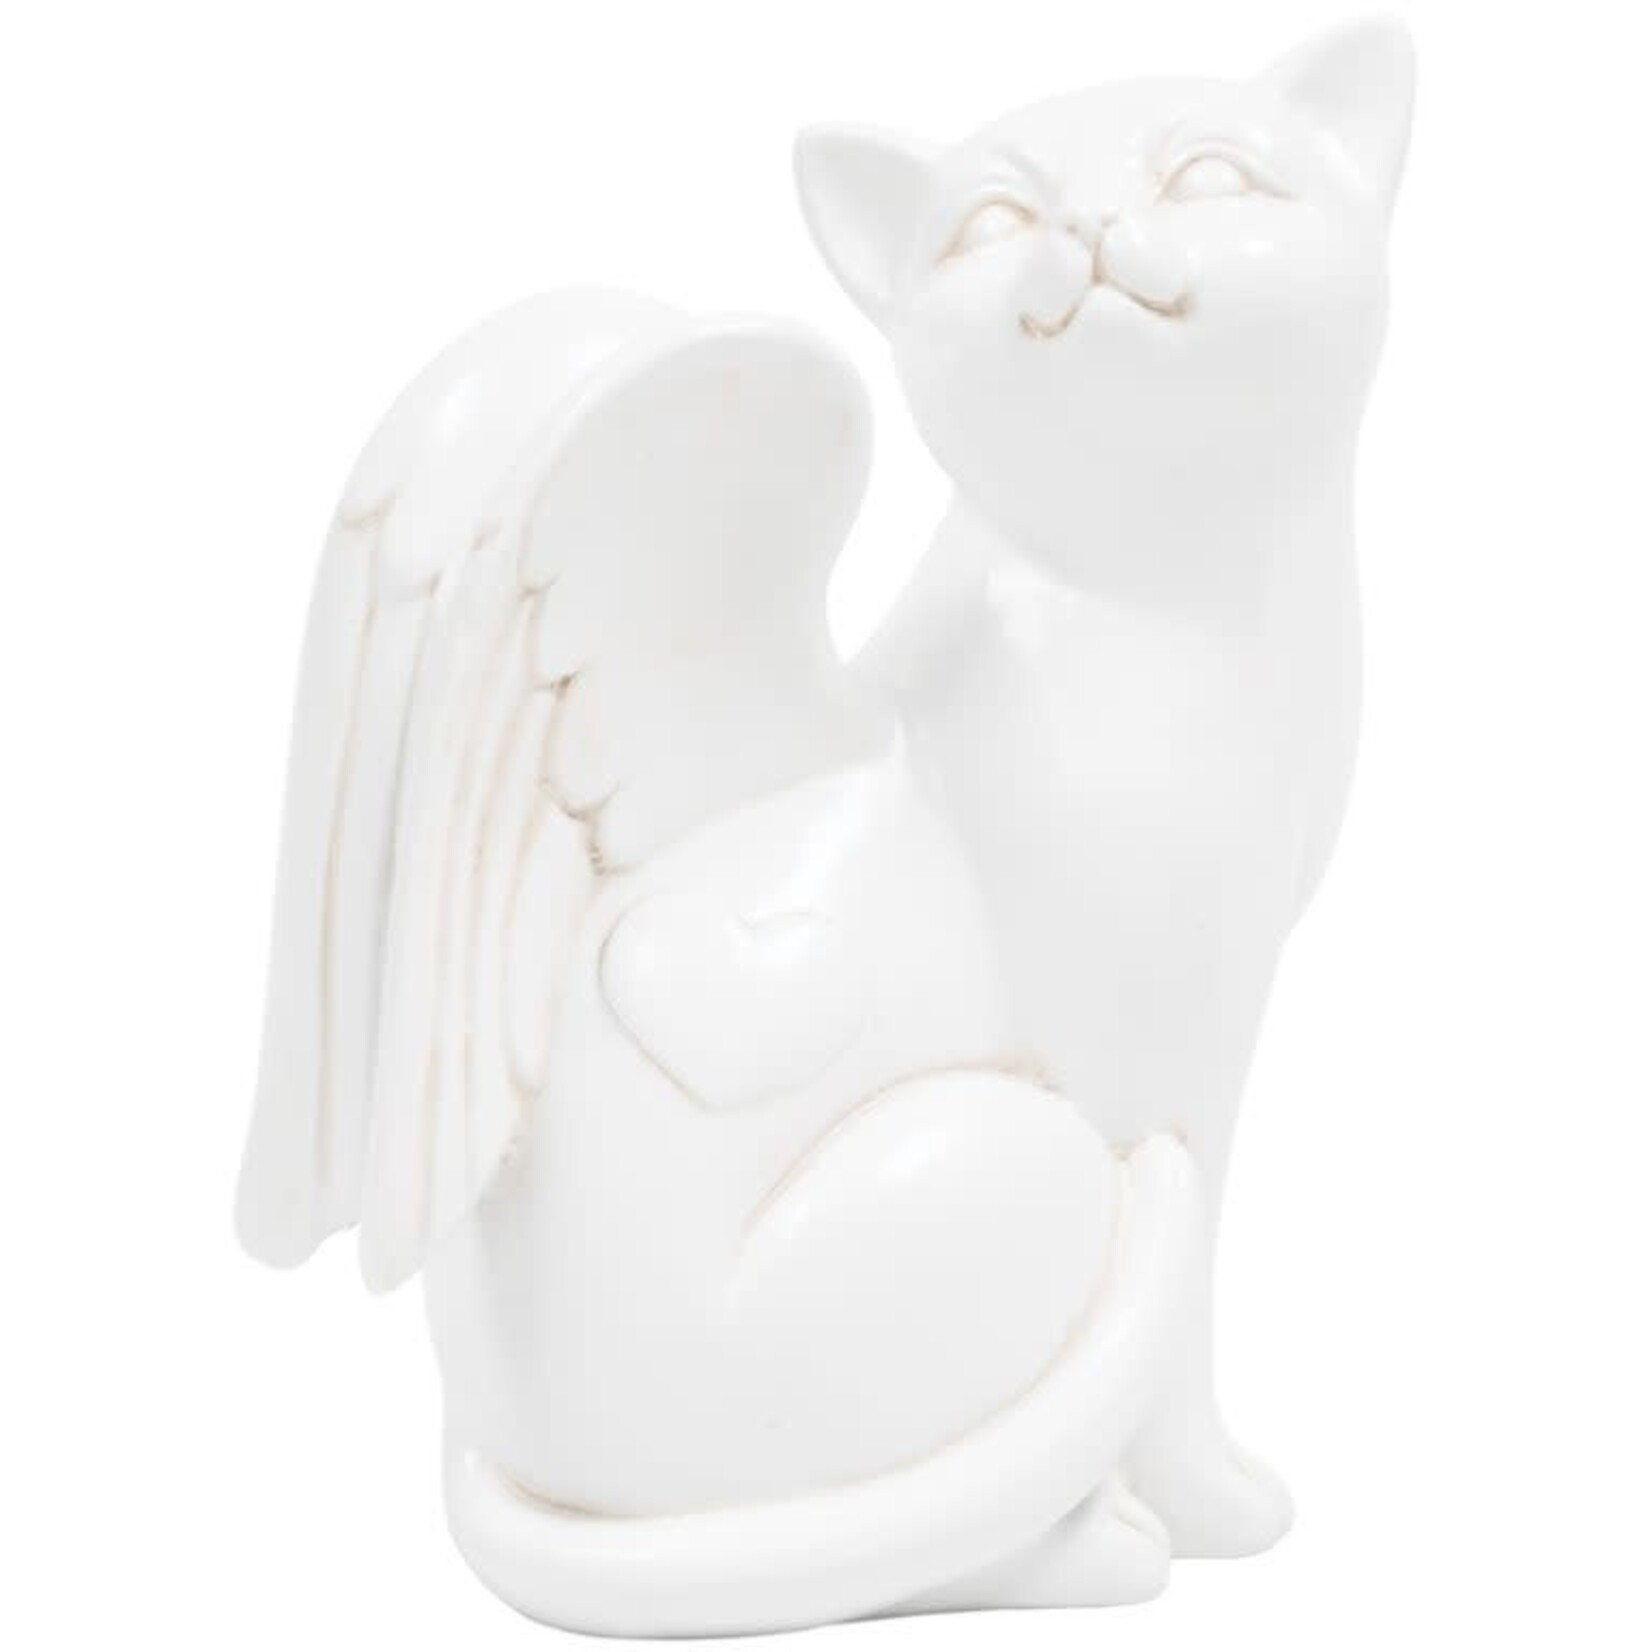 Angel Cat Figurine